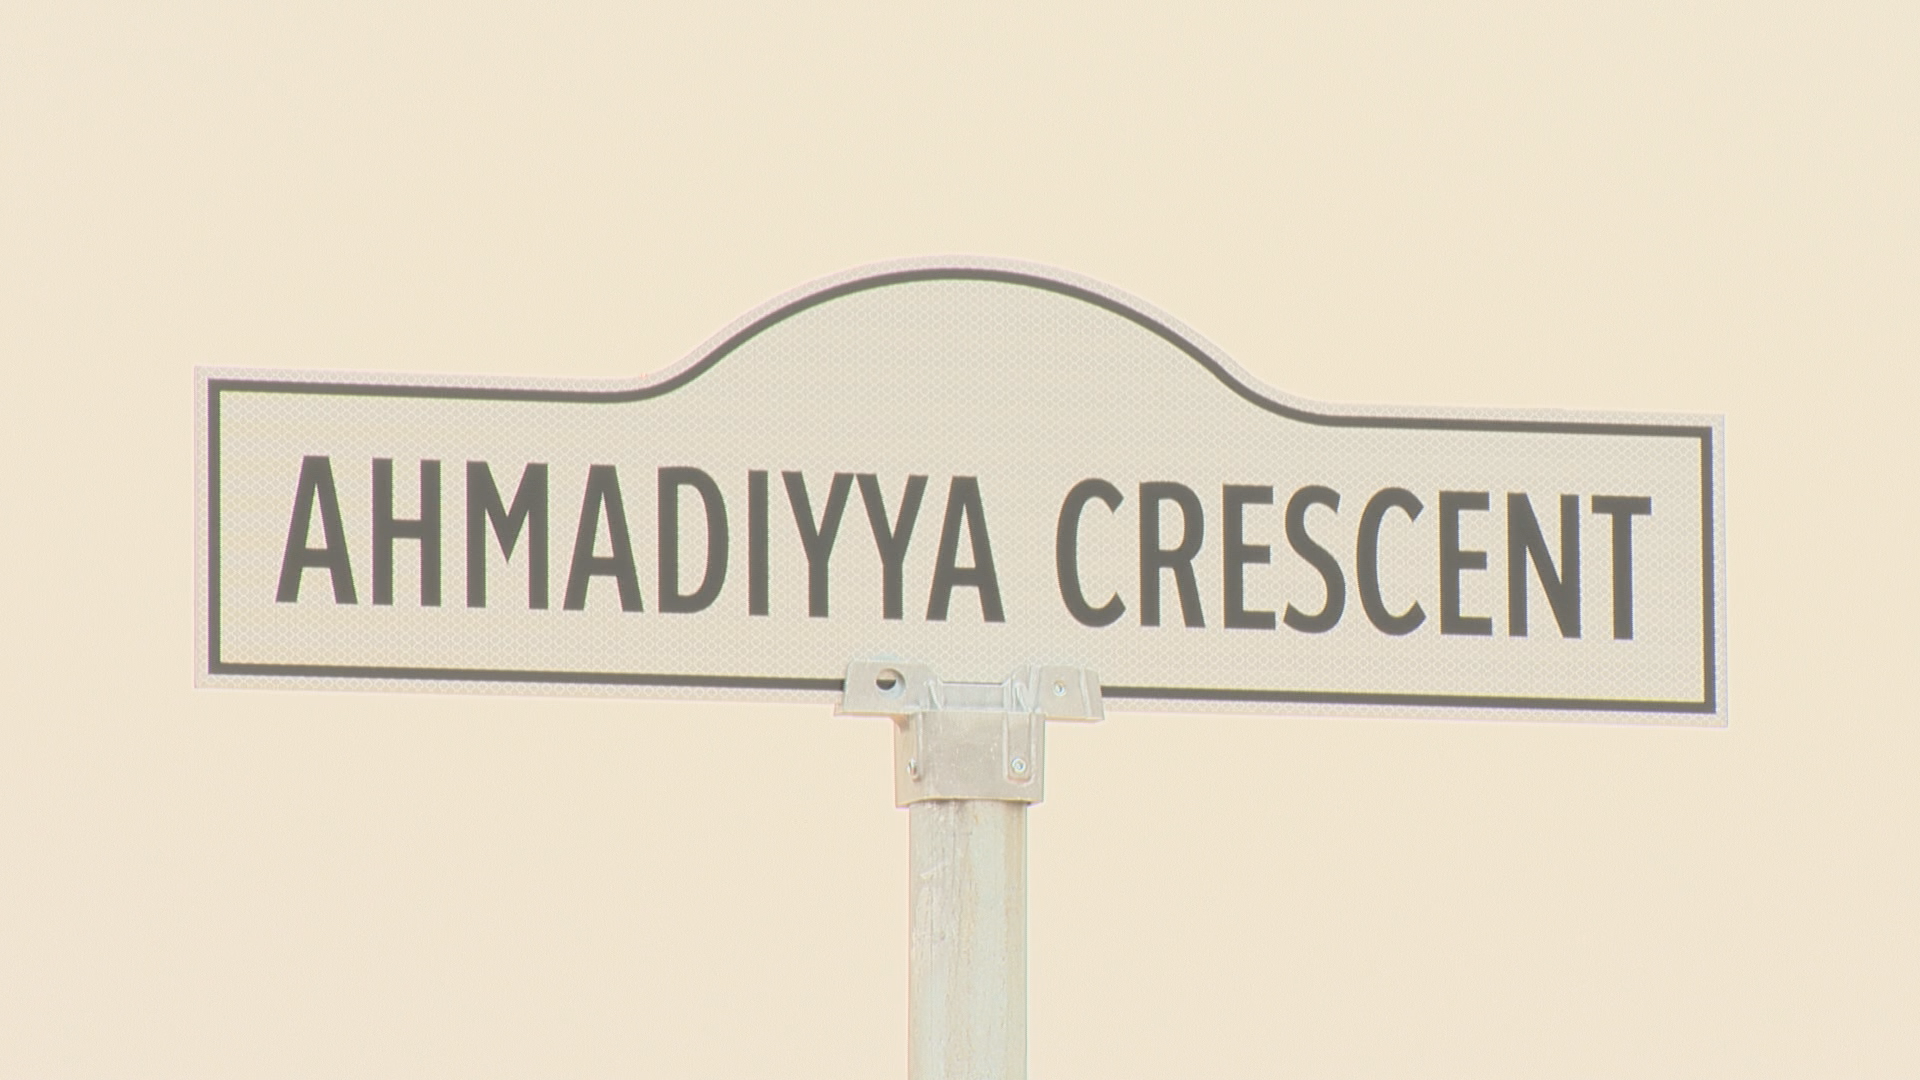 The new sign for Ahmadiyya Crescent. 